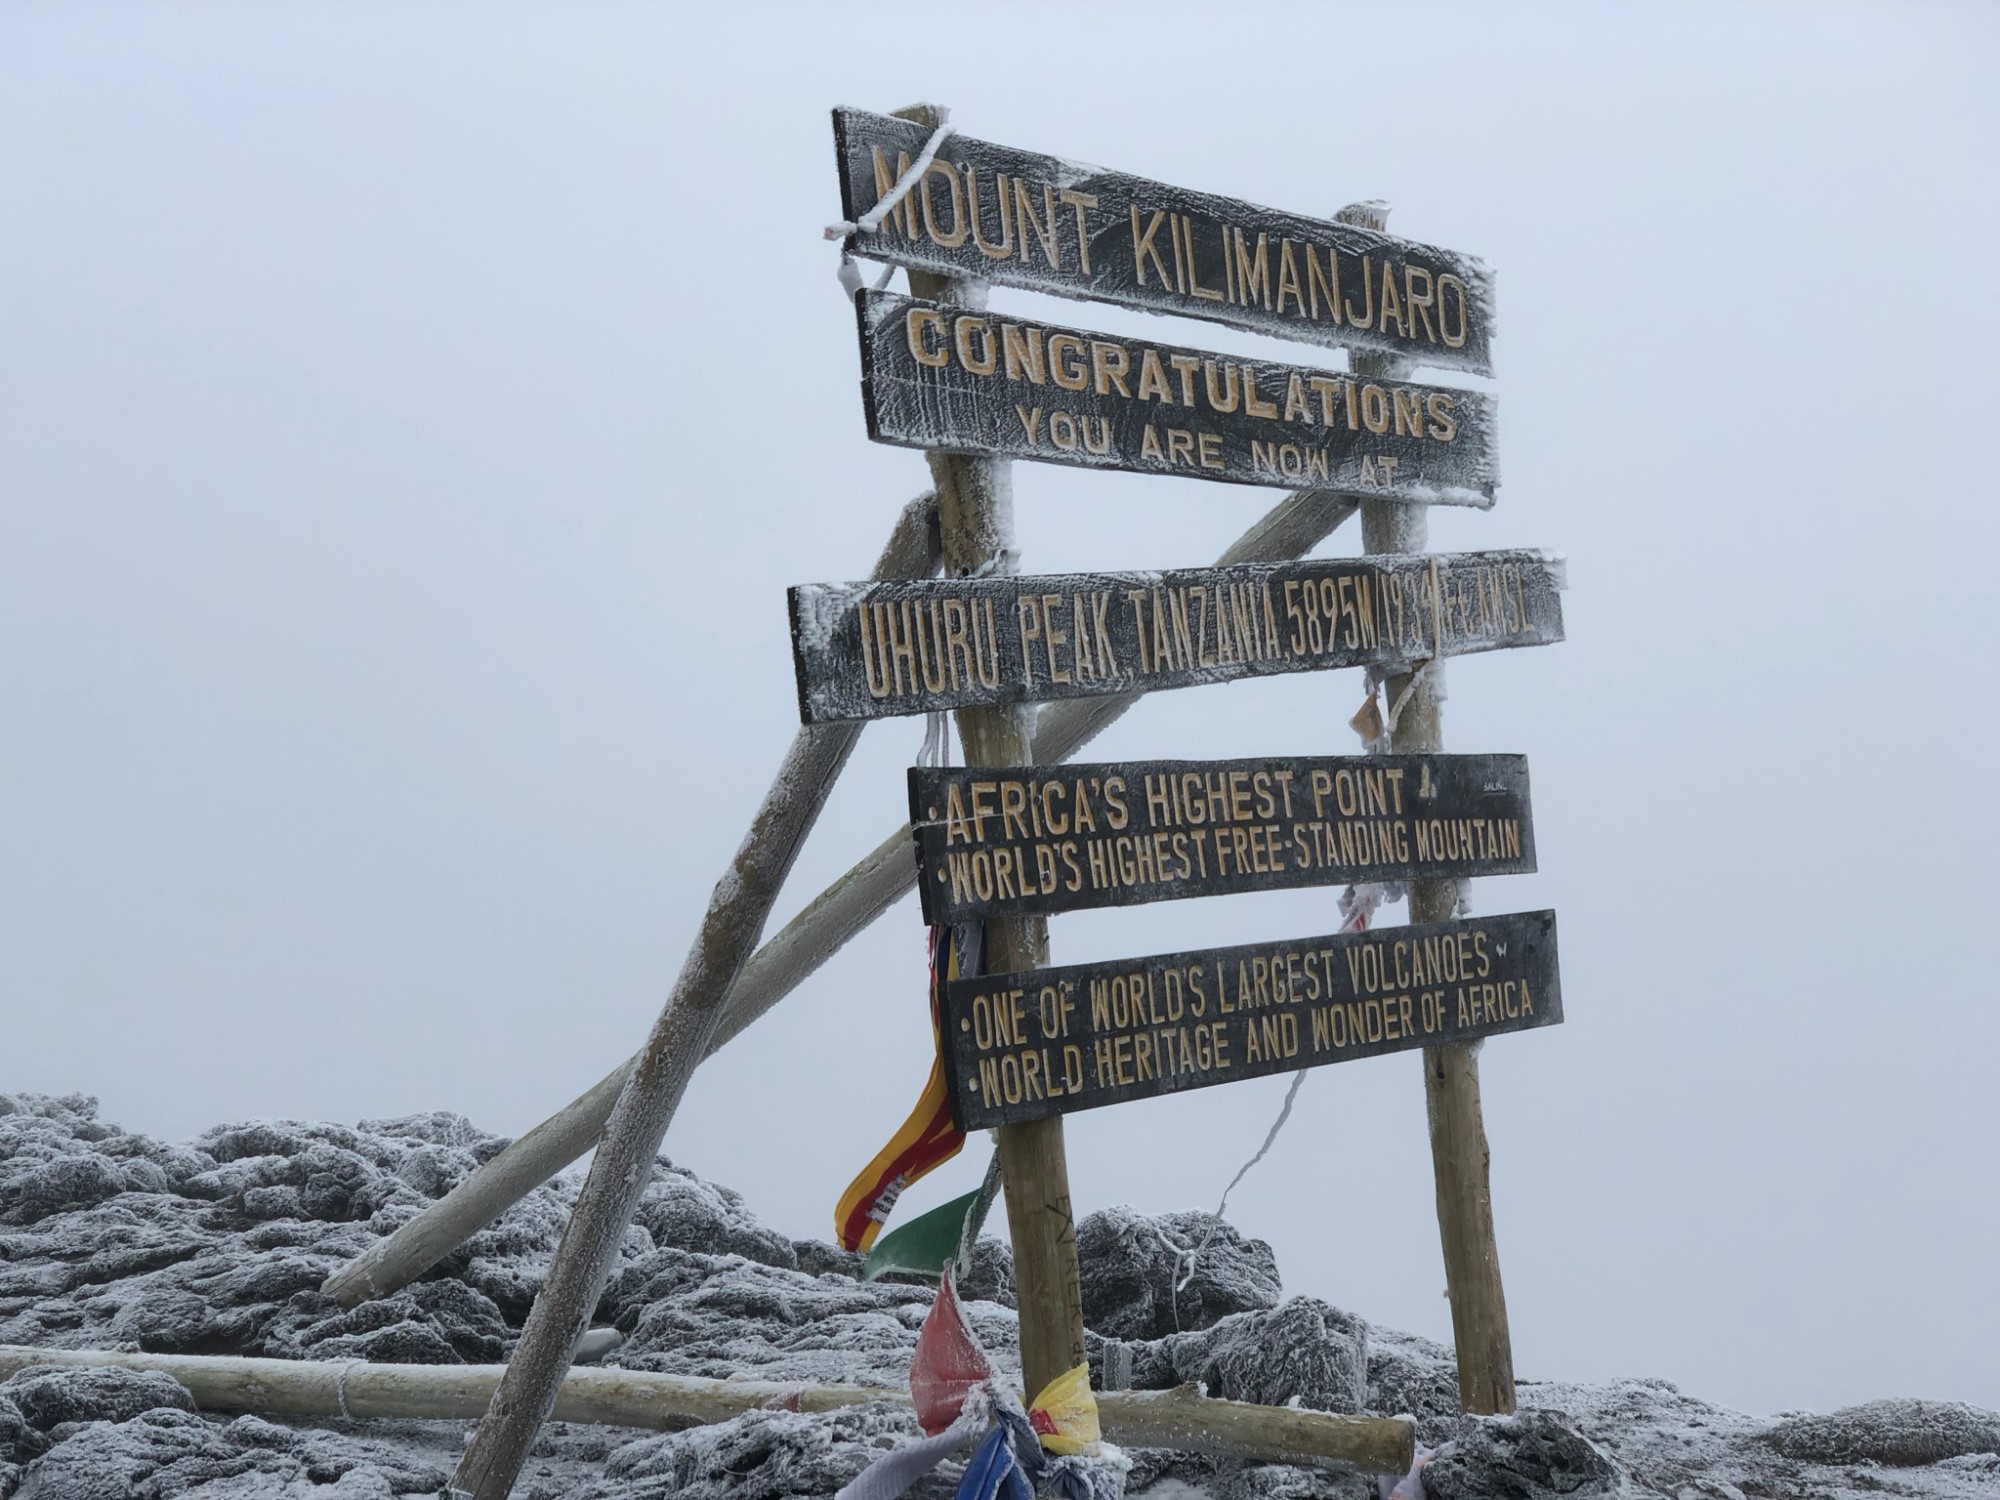 Signage atop Mt Kilimanjaro.